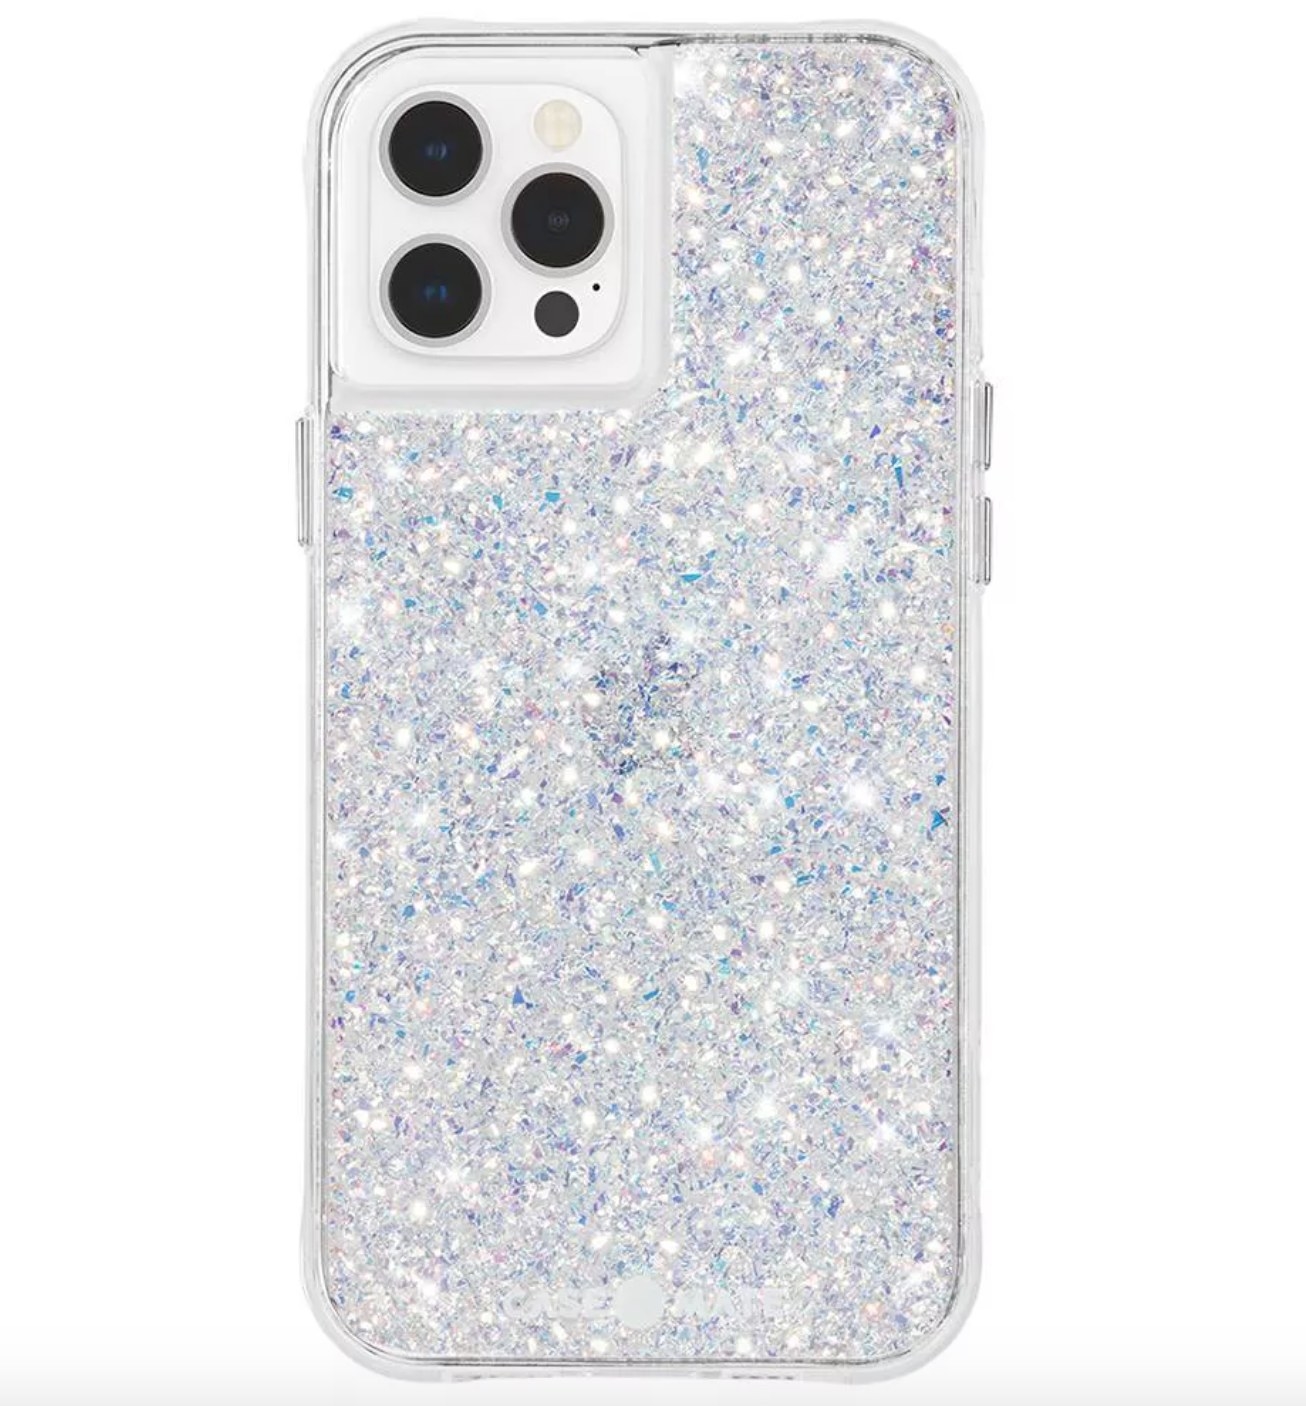 The glittery iPhone